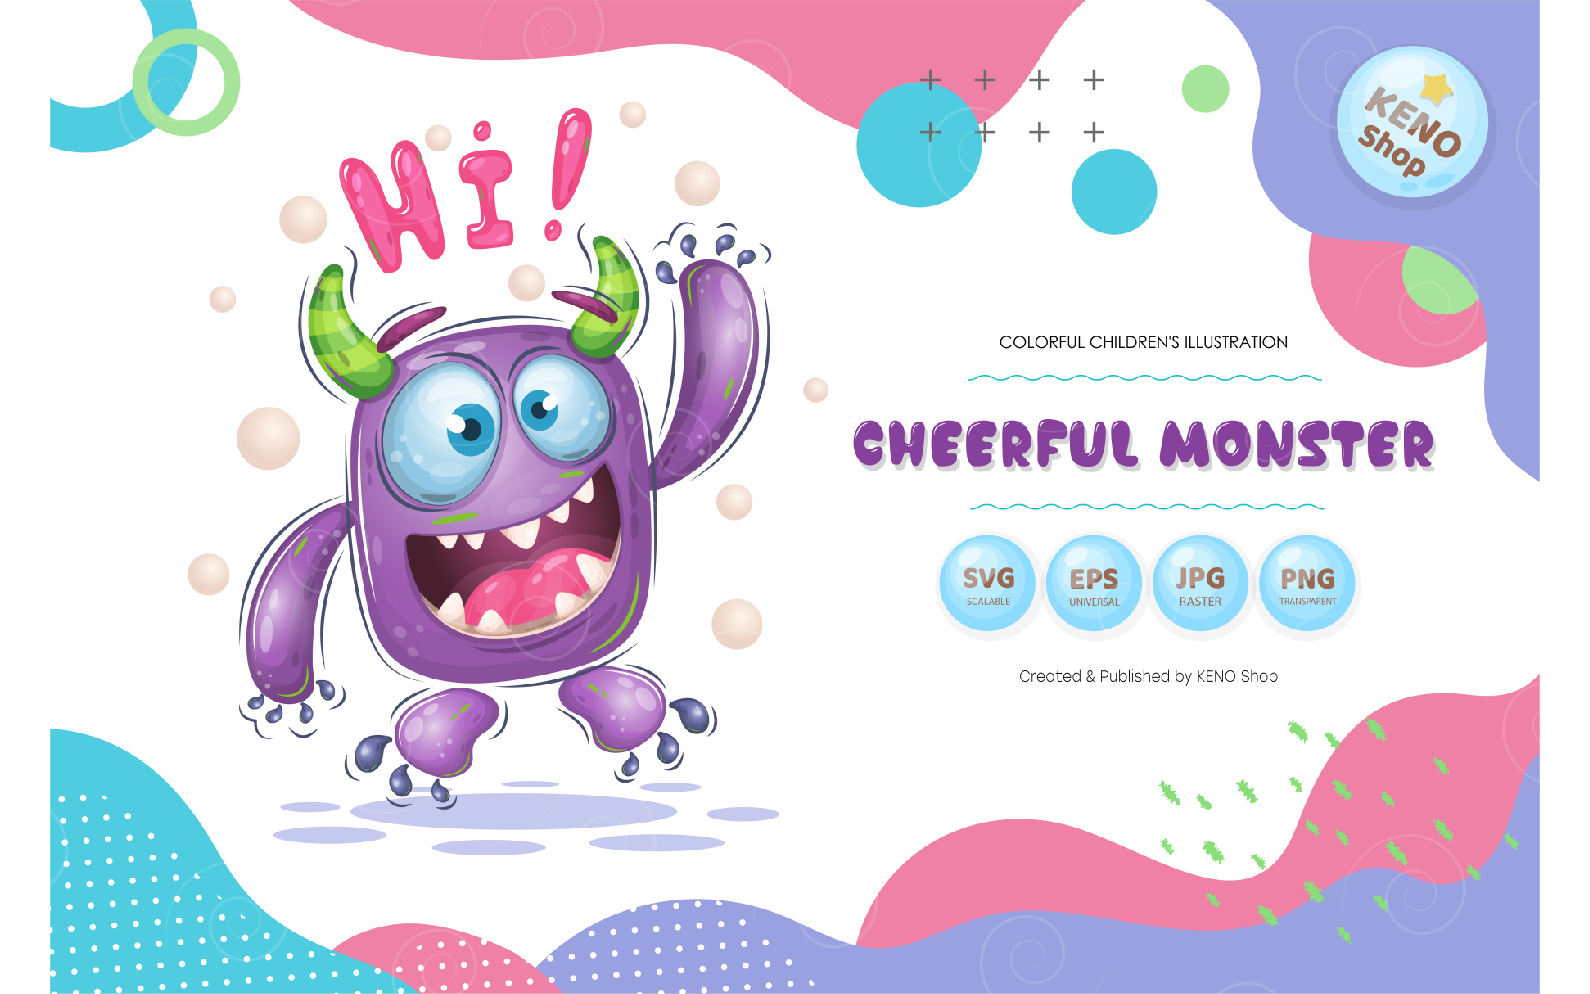 Cheerful Cartoon Monster - Vector Image